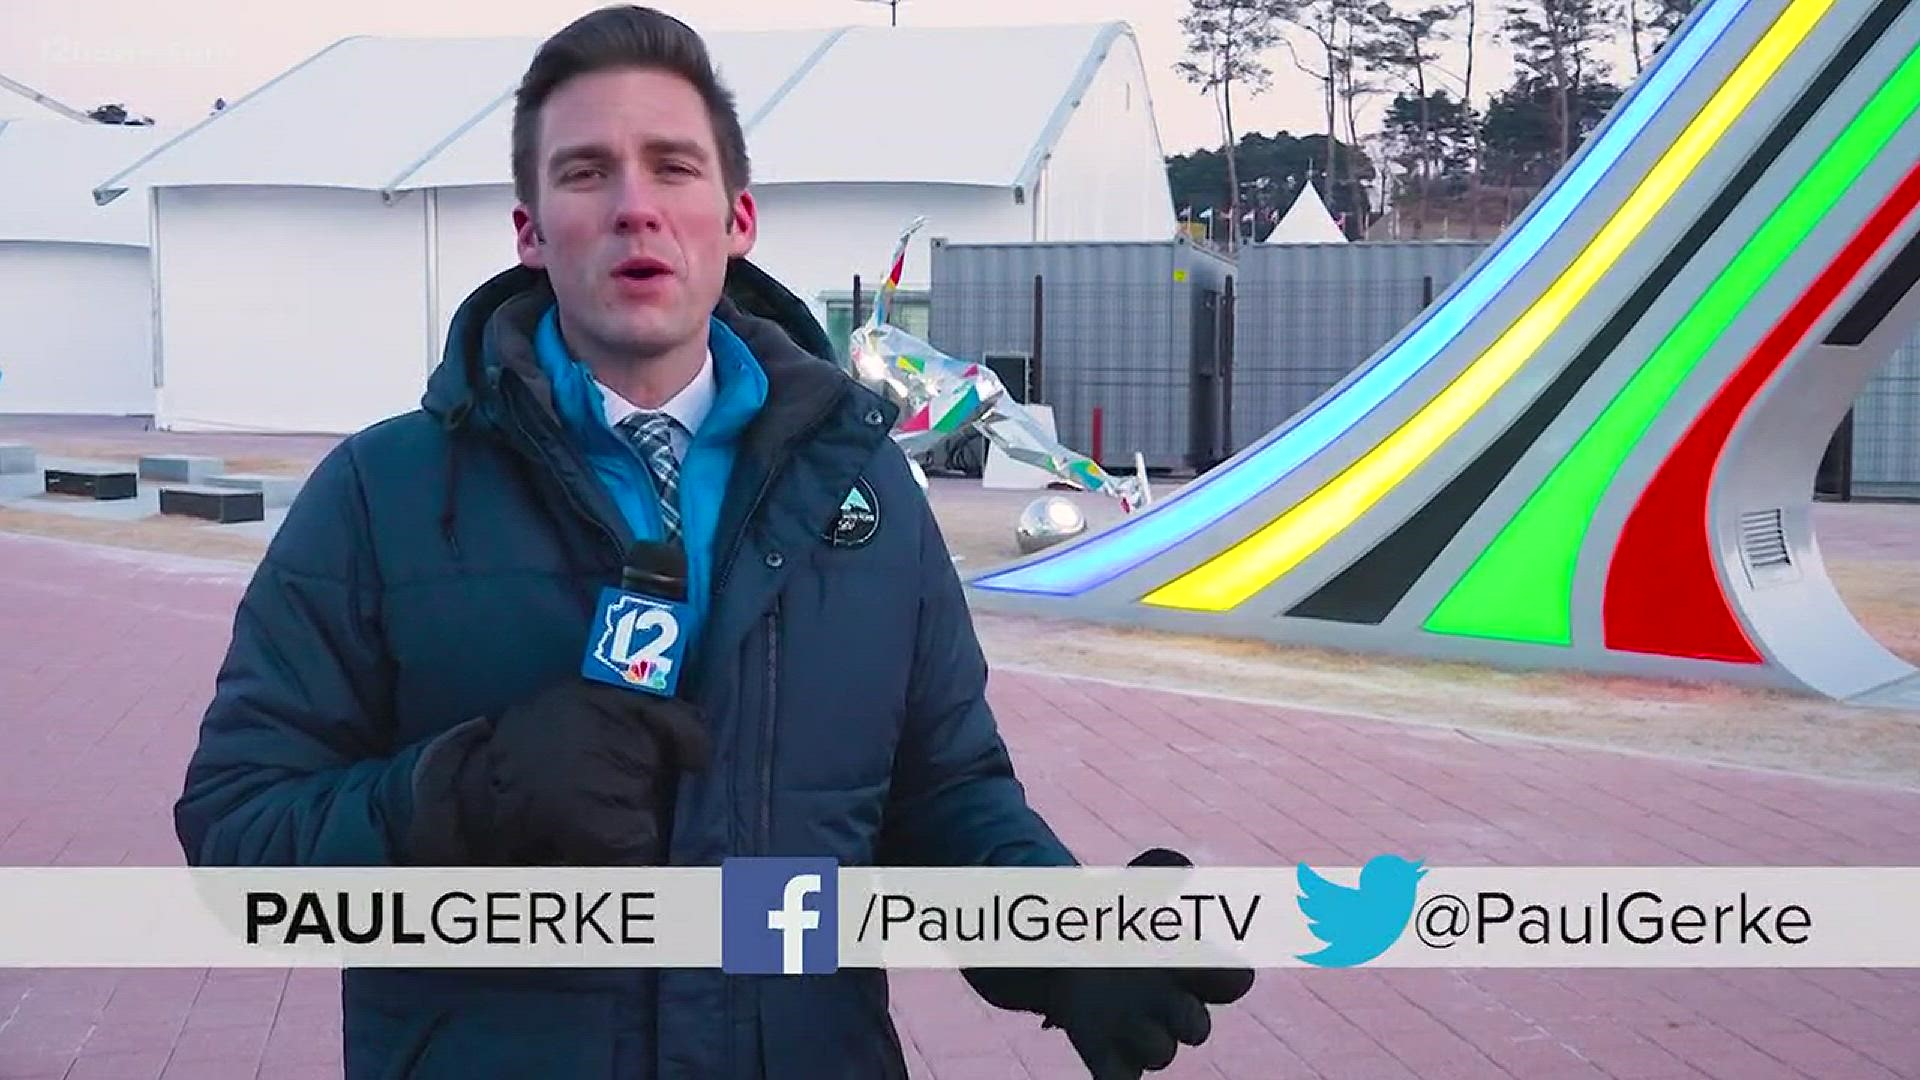 12 News reporter Paul Gerke in South Korea to cover the Winter Olympics. #GerkesGold